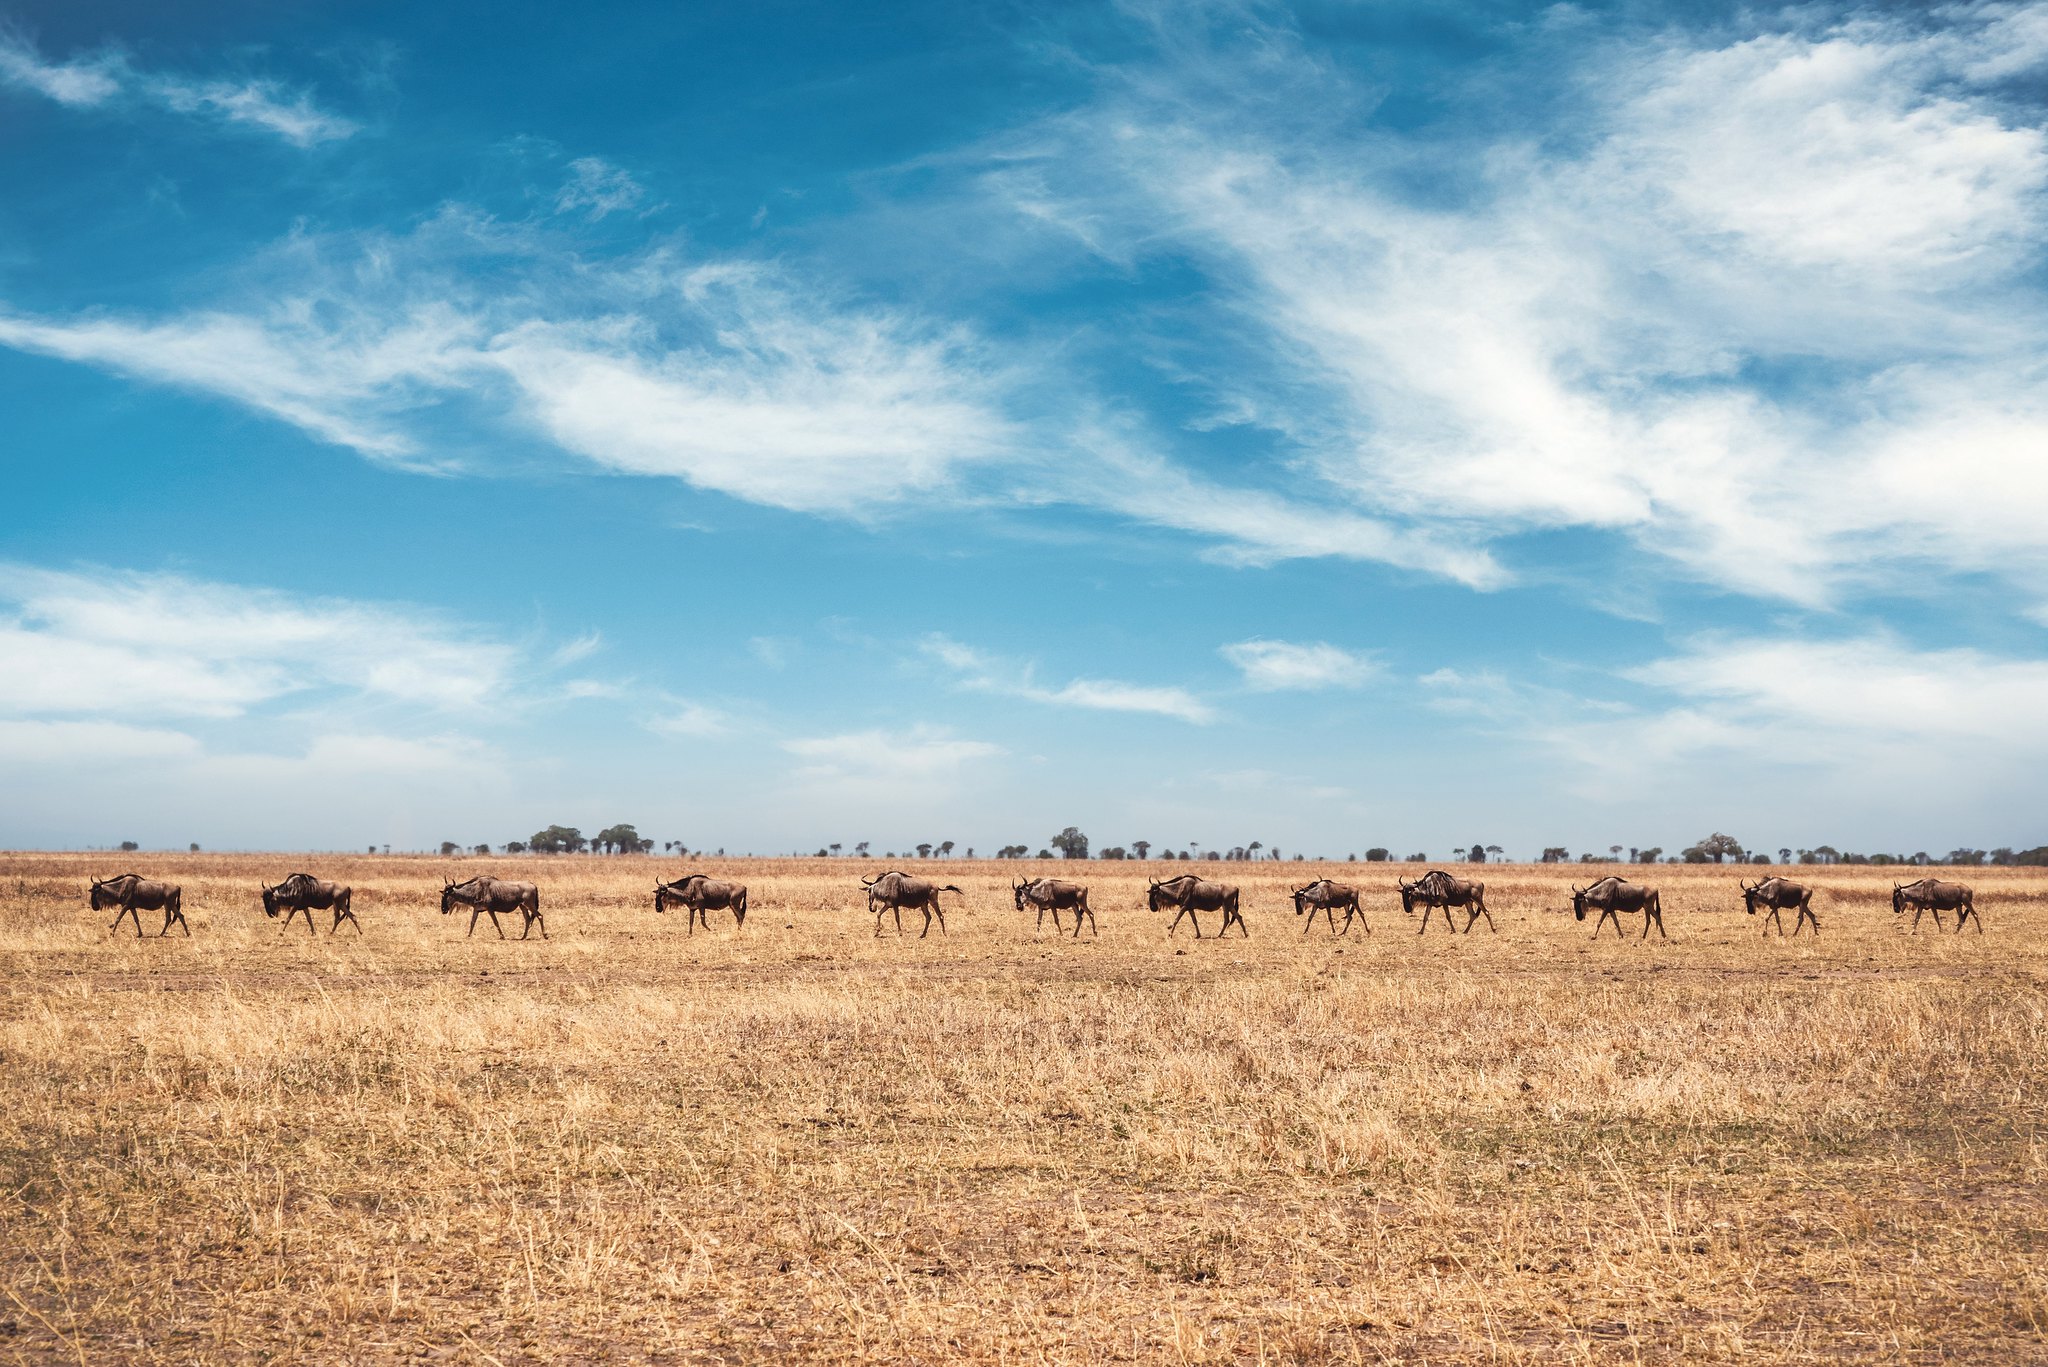 Wildebeests of Tanzania